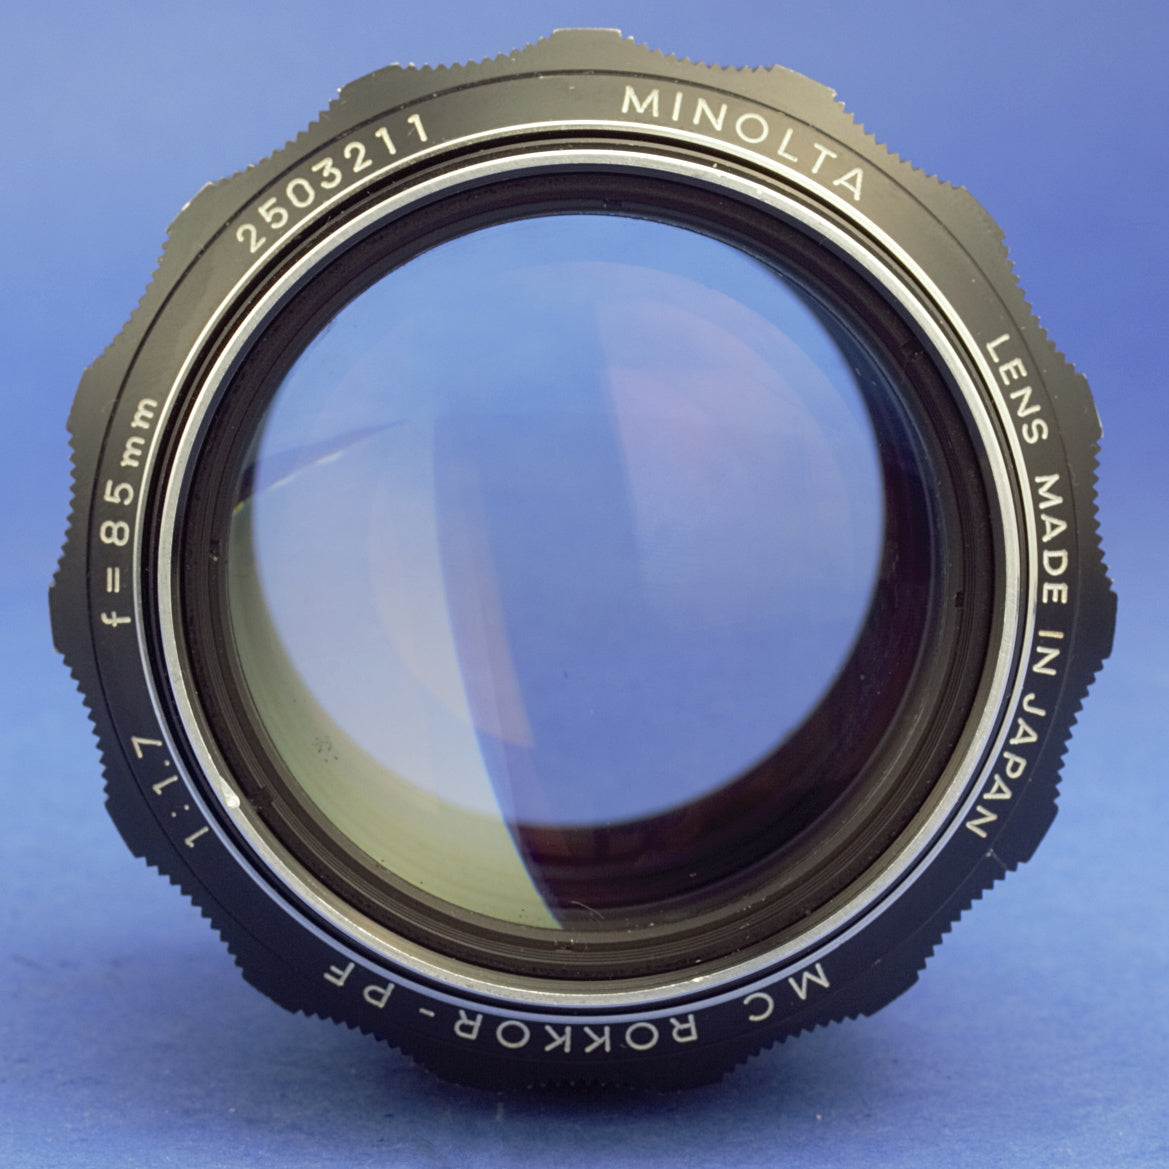 Minolta MC 85mm 1.7 Lens